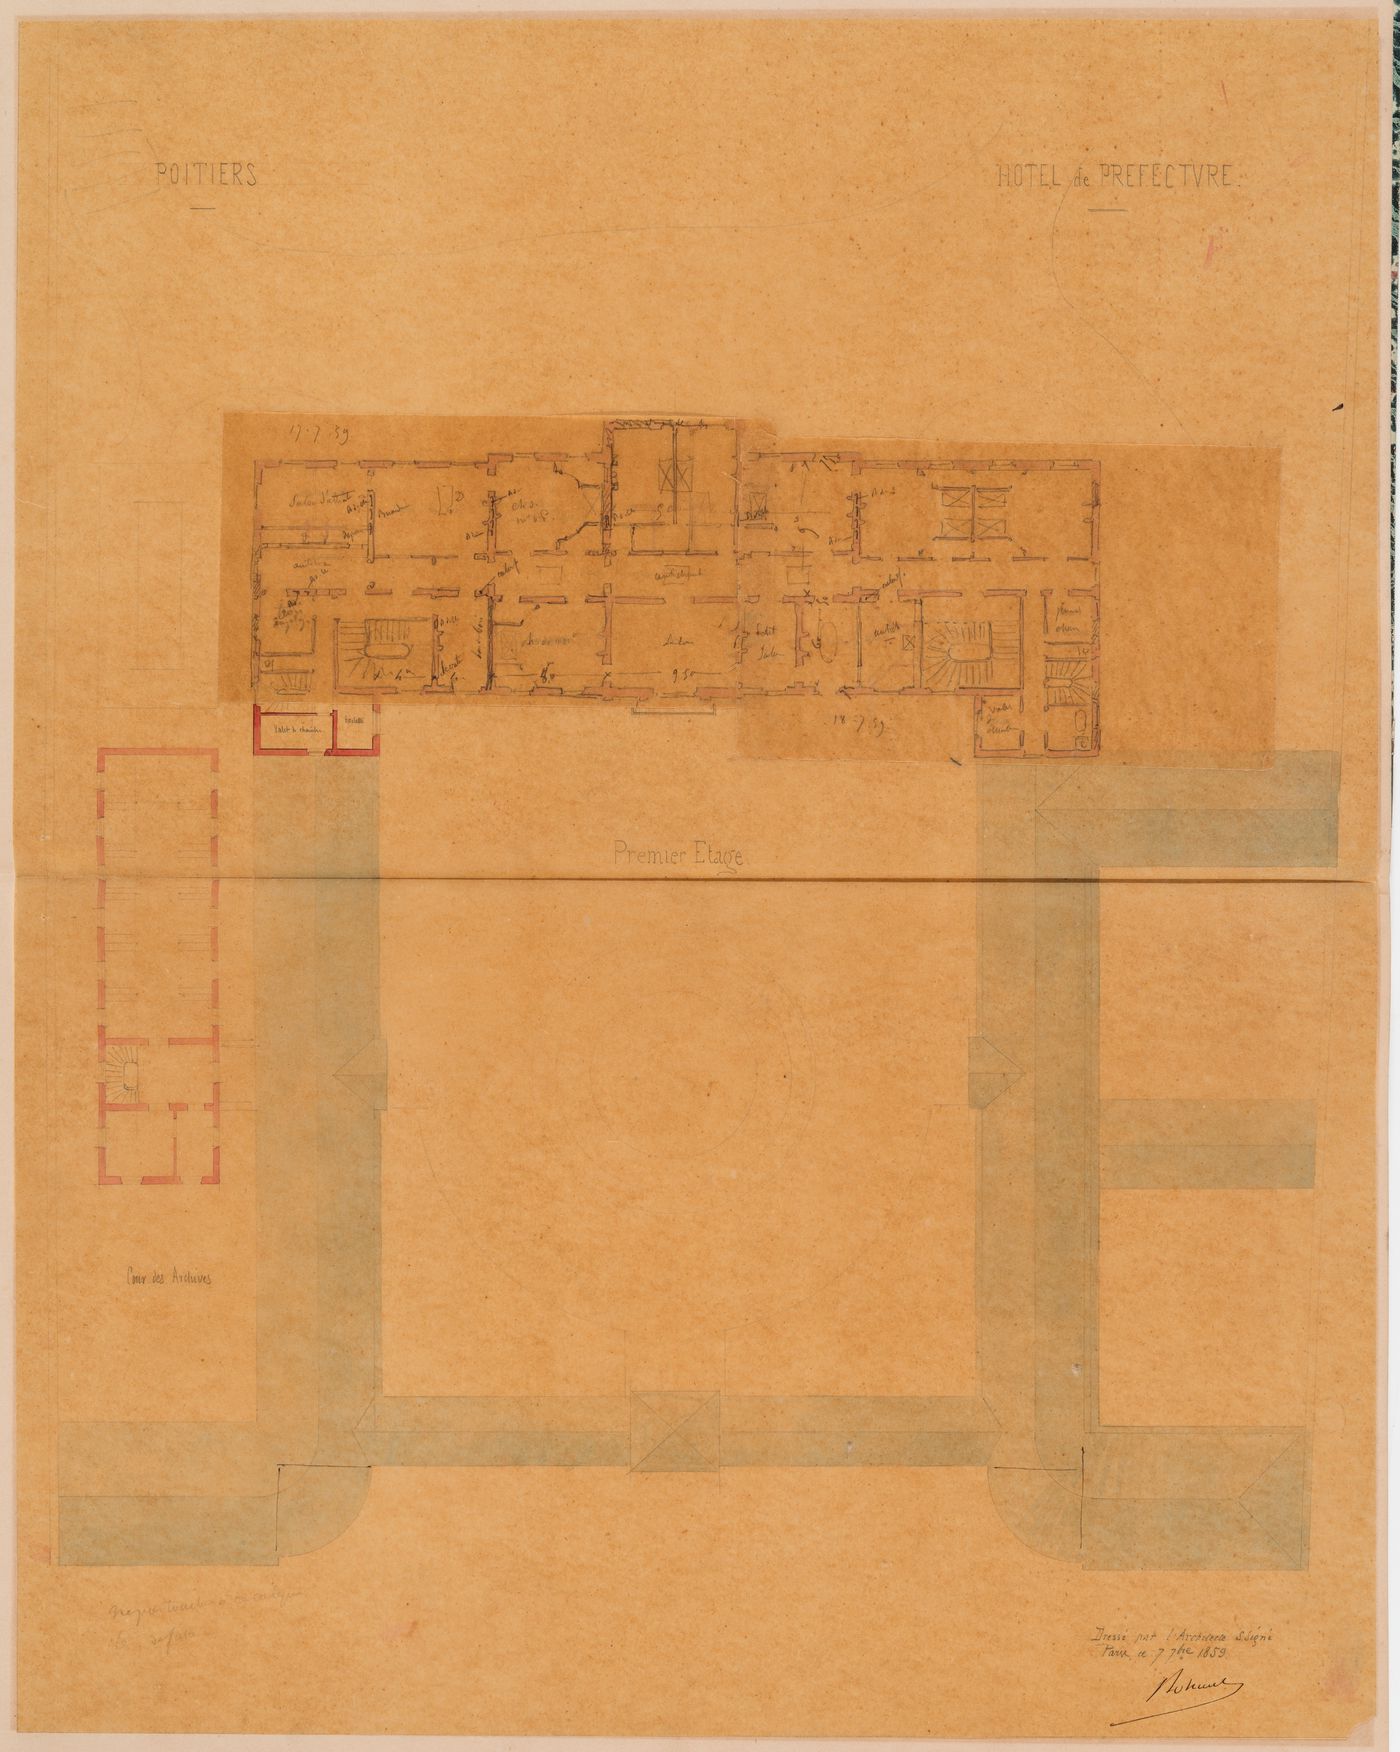 Project for a Hôtel de préfecture, Poitiers: First floor plan with attached revisions for the Hôtel du Préfet